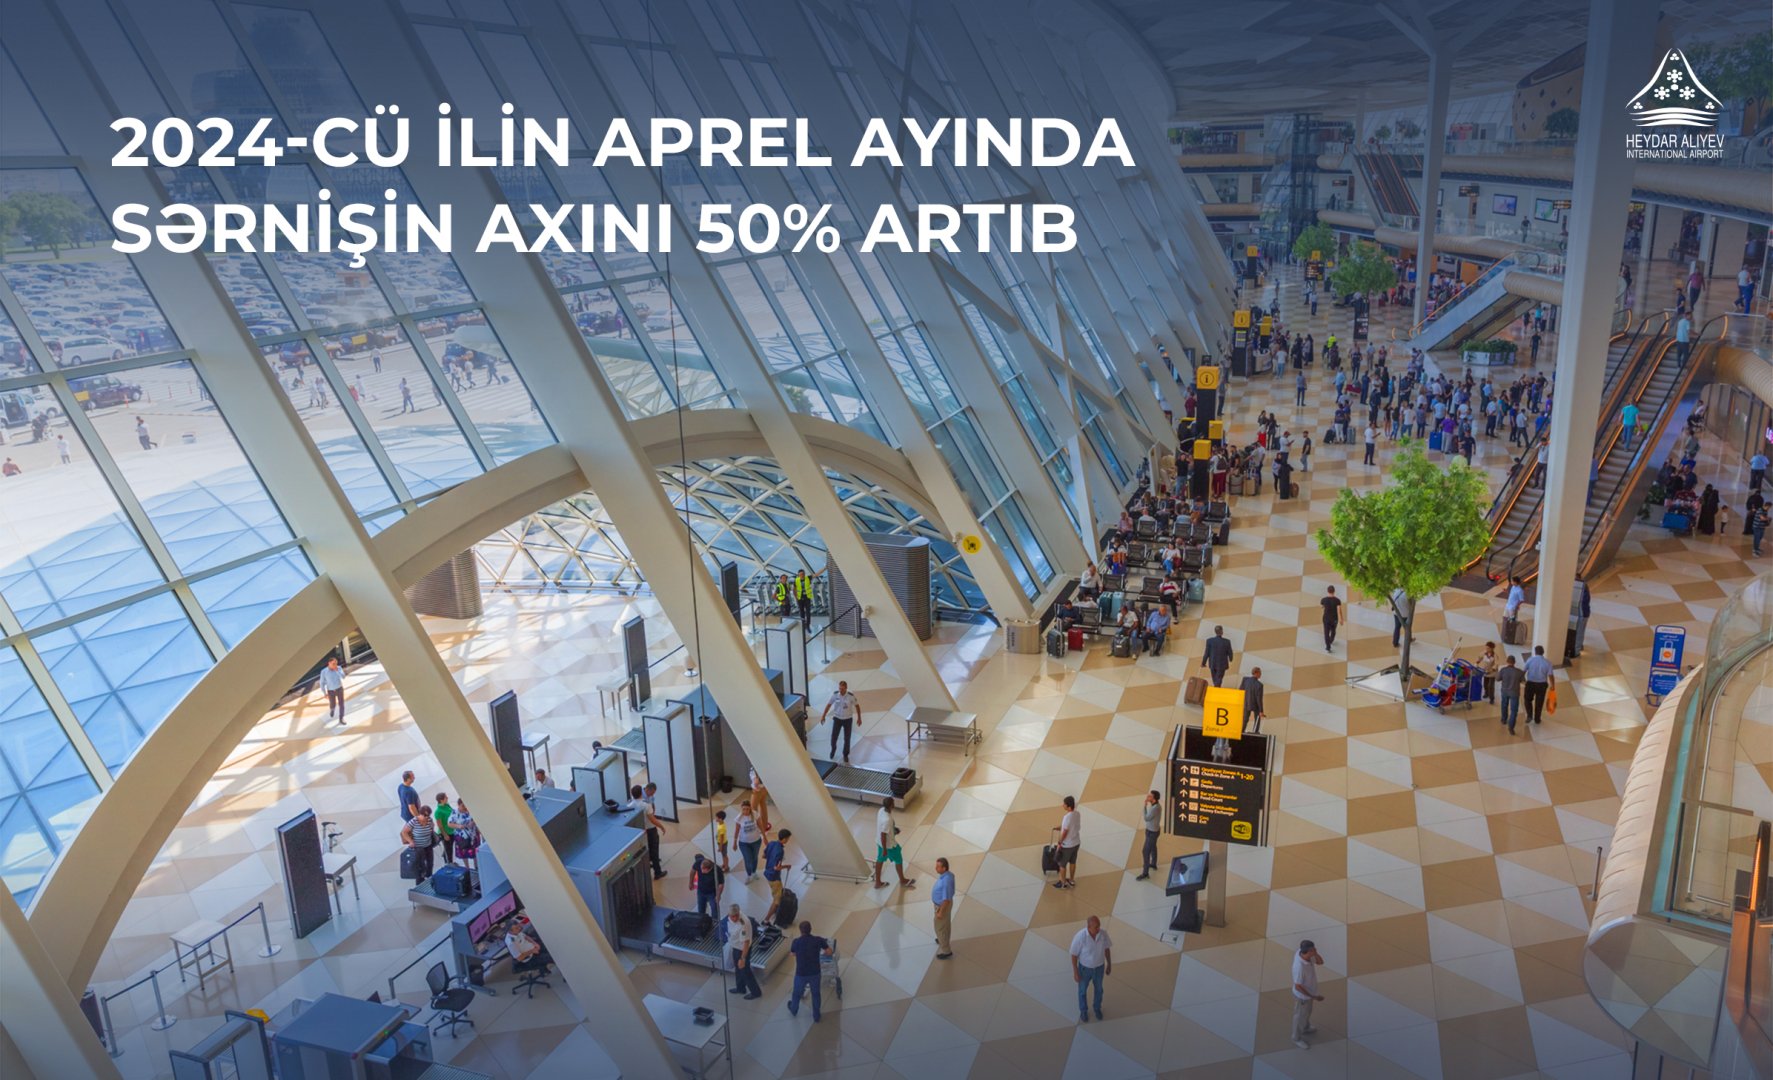 At Baku Airport, passenger traffic increased by 50% in April 2024